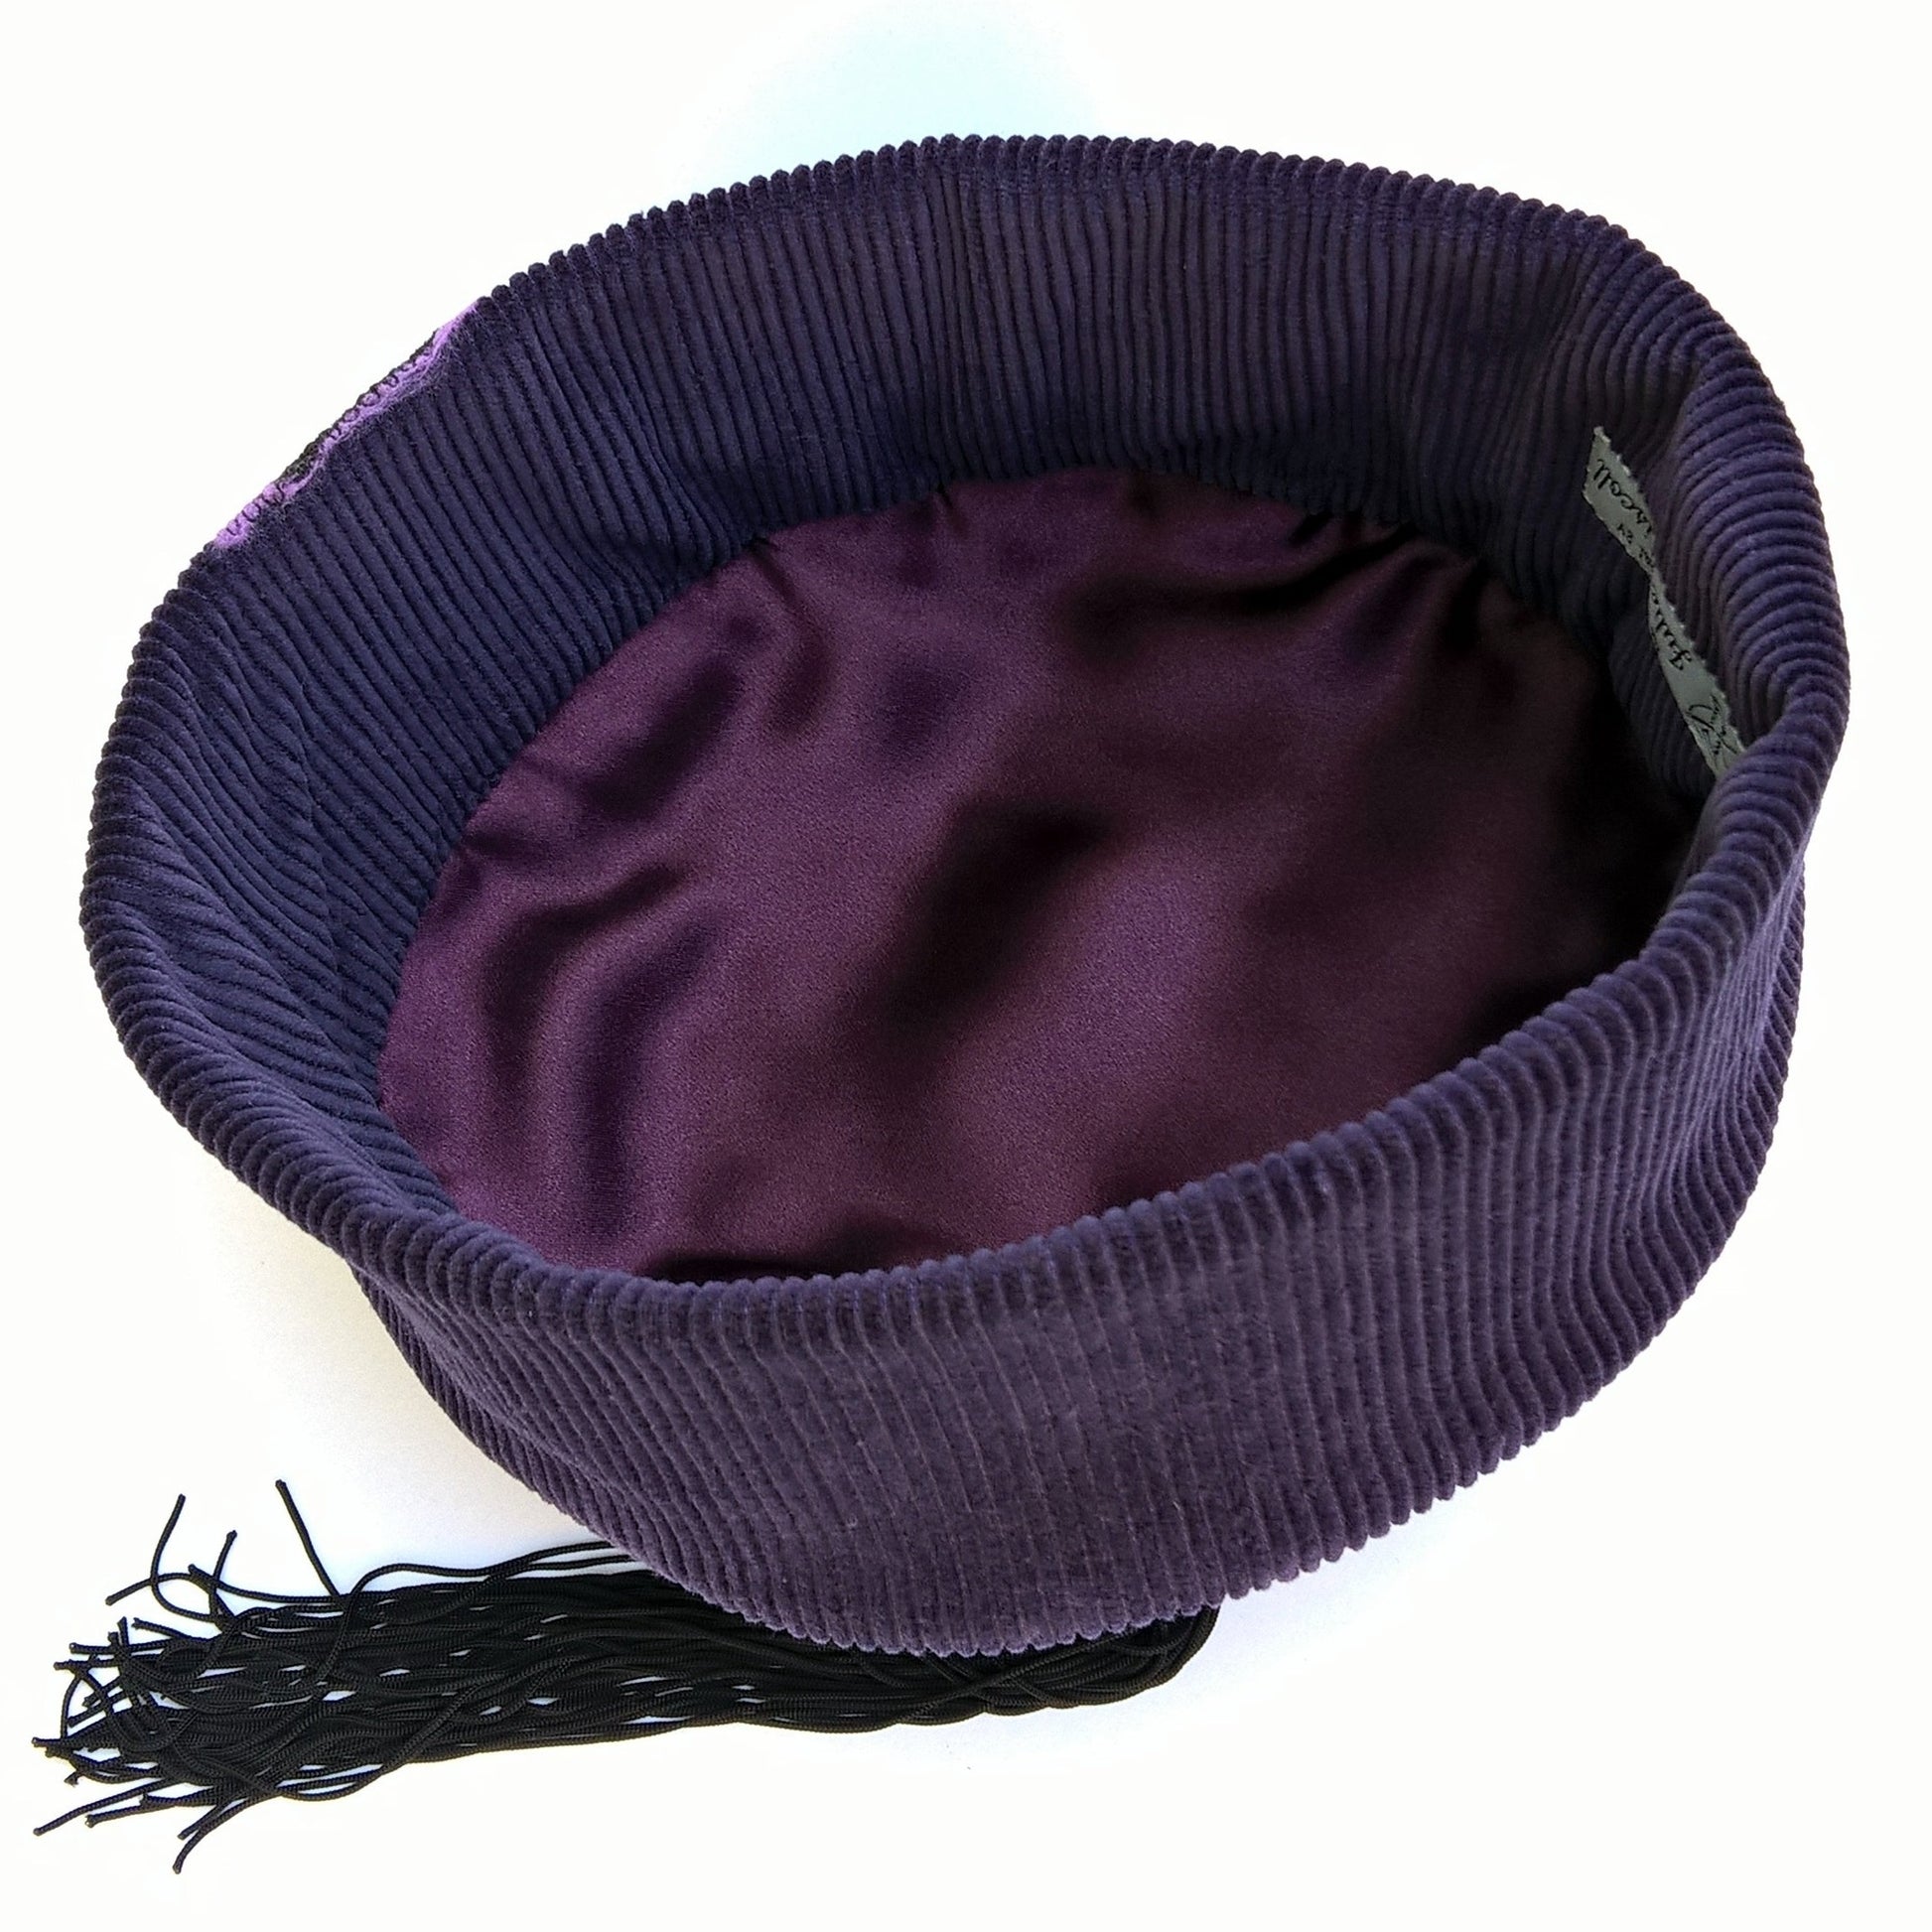 satin lined purple nuno felted smoking cap